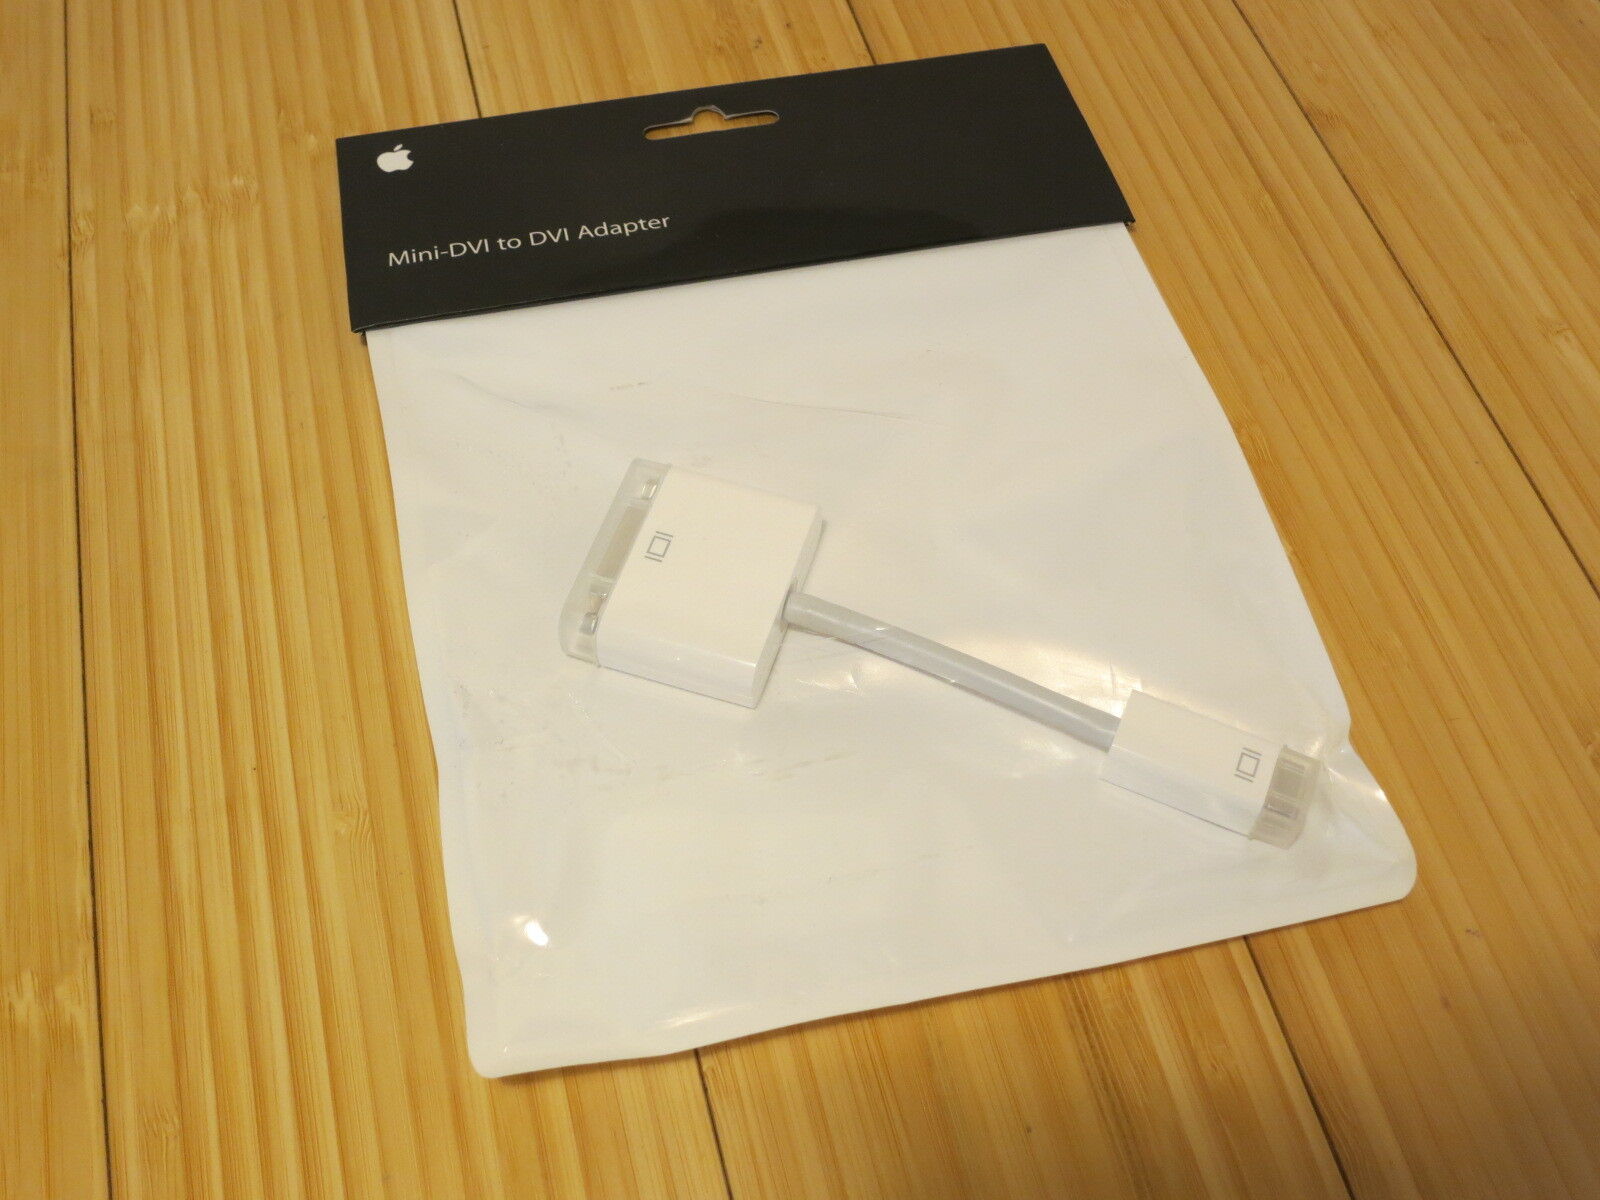 New Genuine Apple Mini-DVI to DVI Adapter M9321G/B OEM